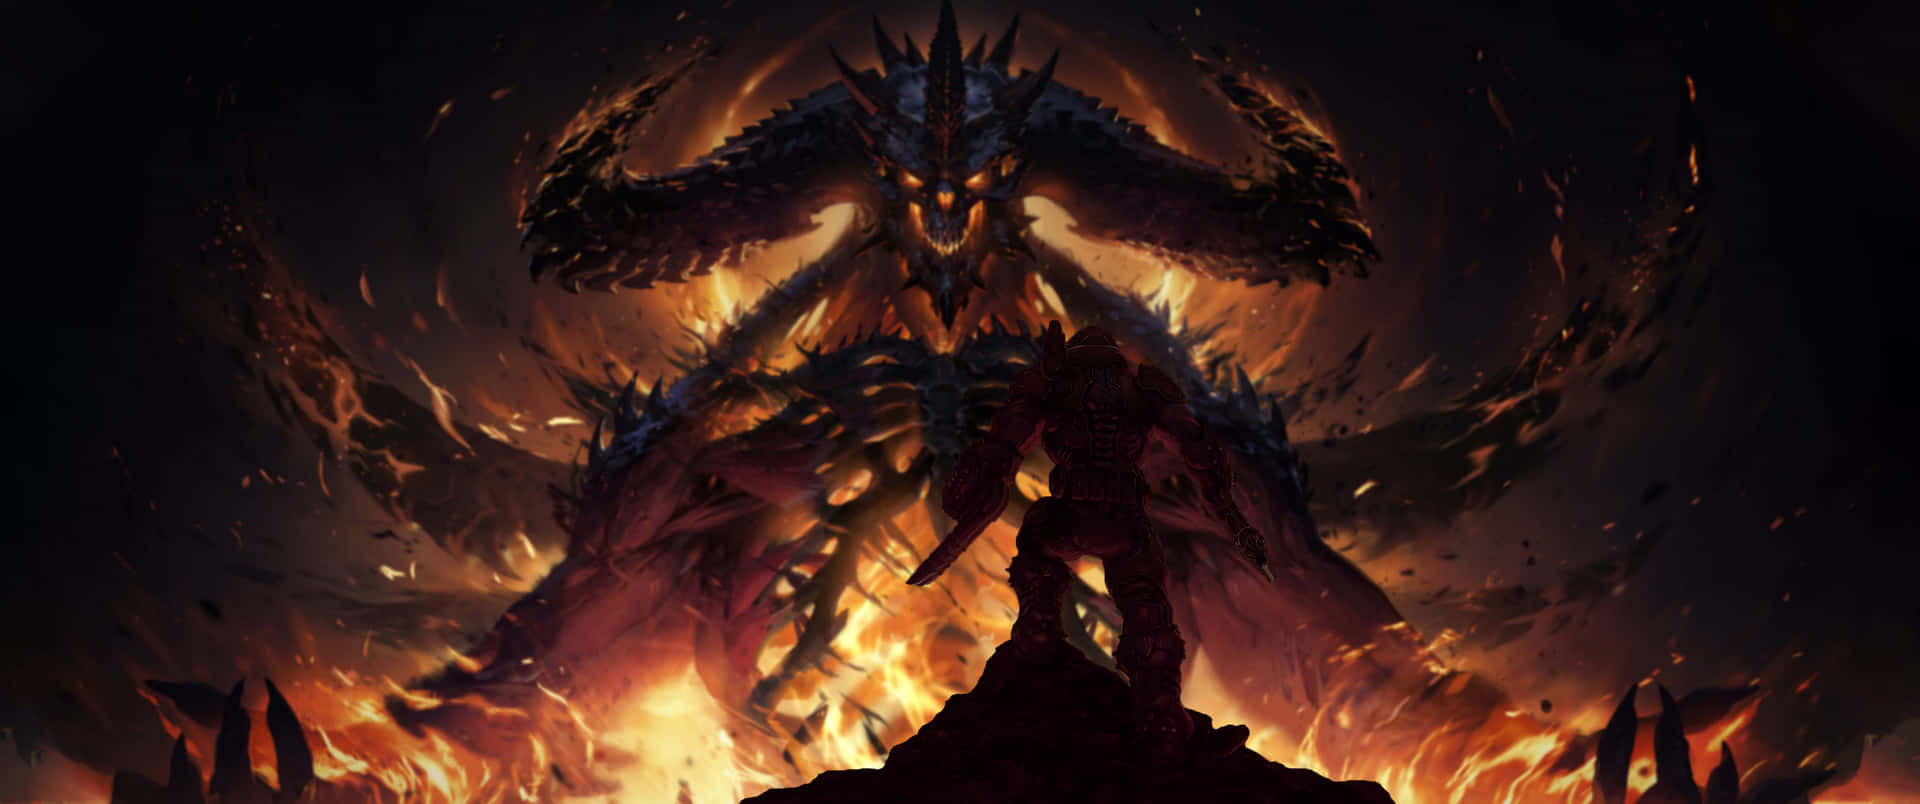 Doomguye Demon Hell 3440x1440p Sfondo Di Doom